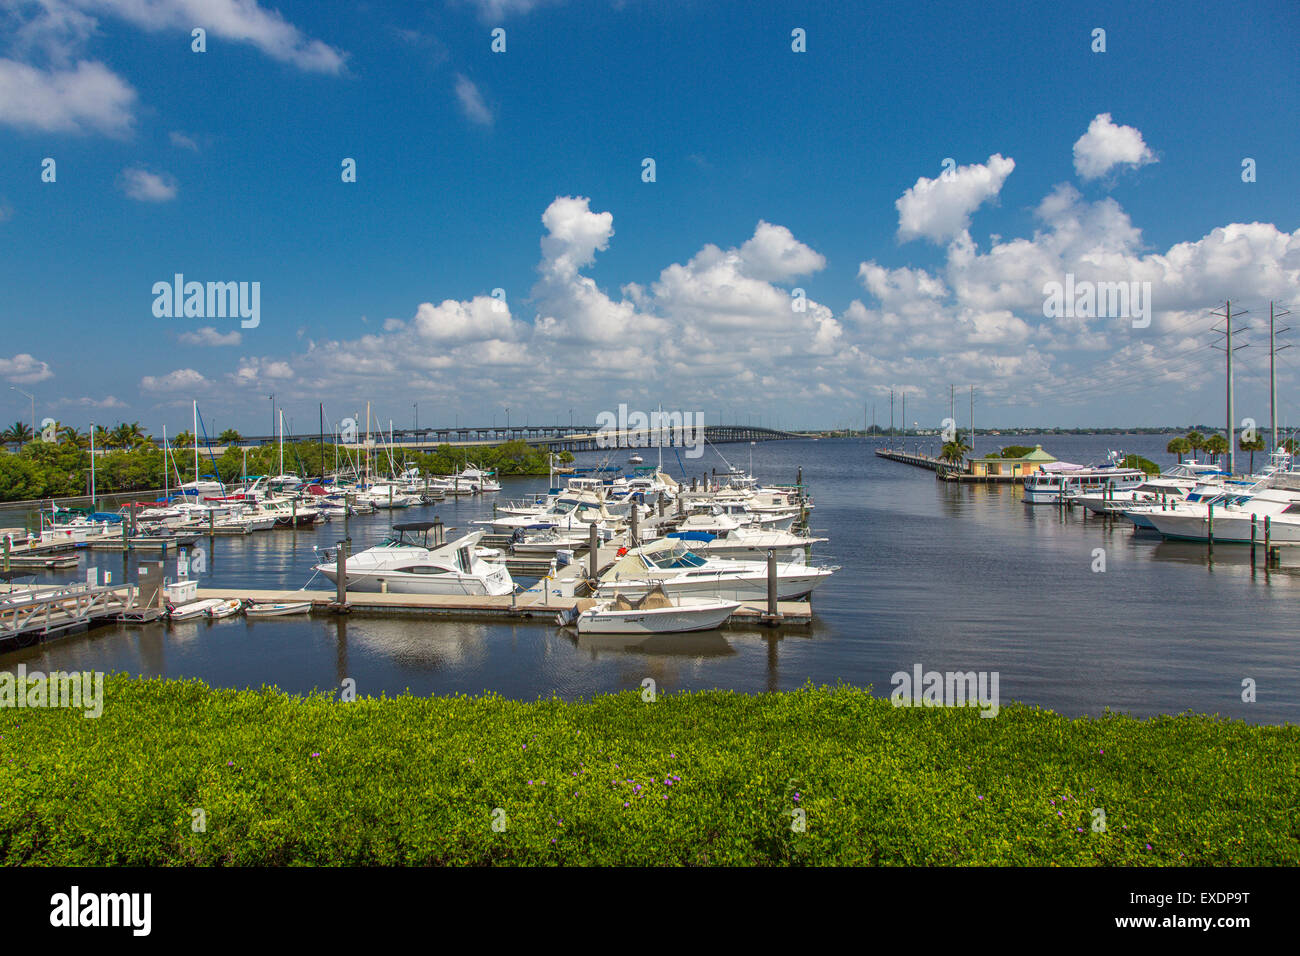 Marina on Peace River in Punta Gorda Florida Stock Photo